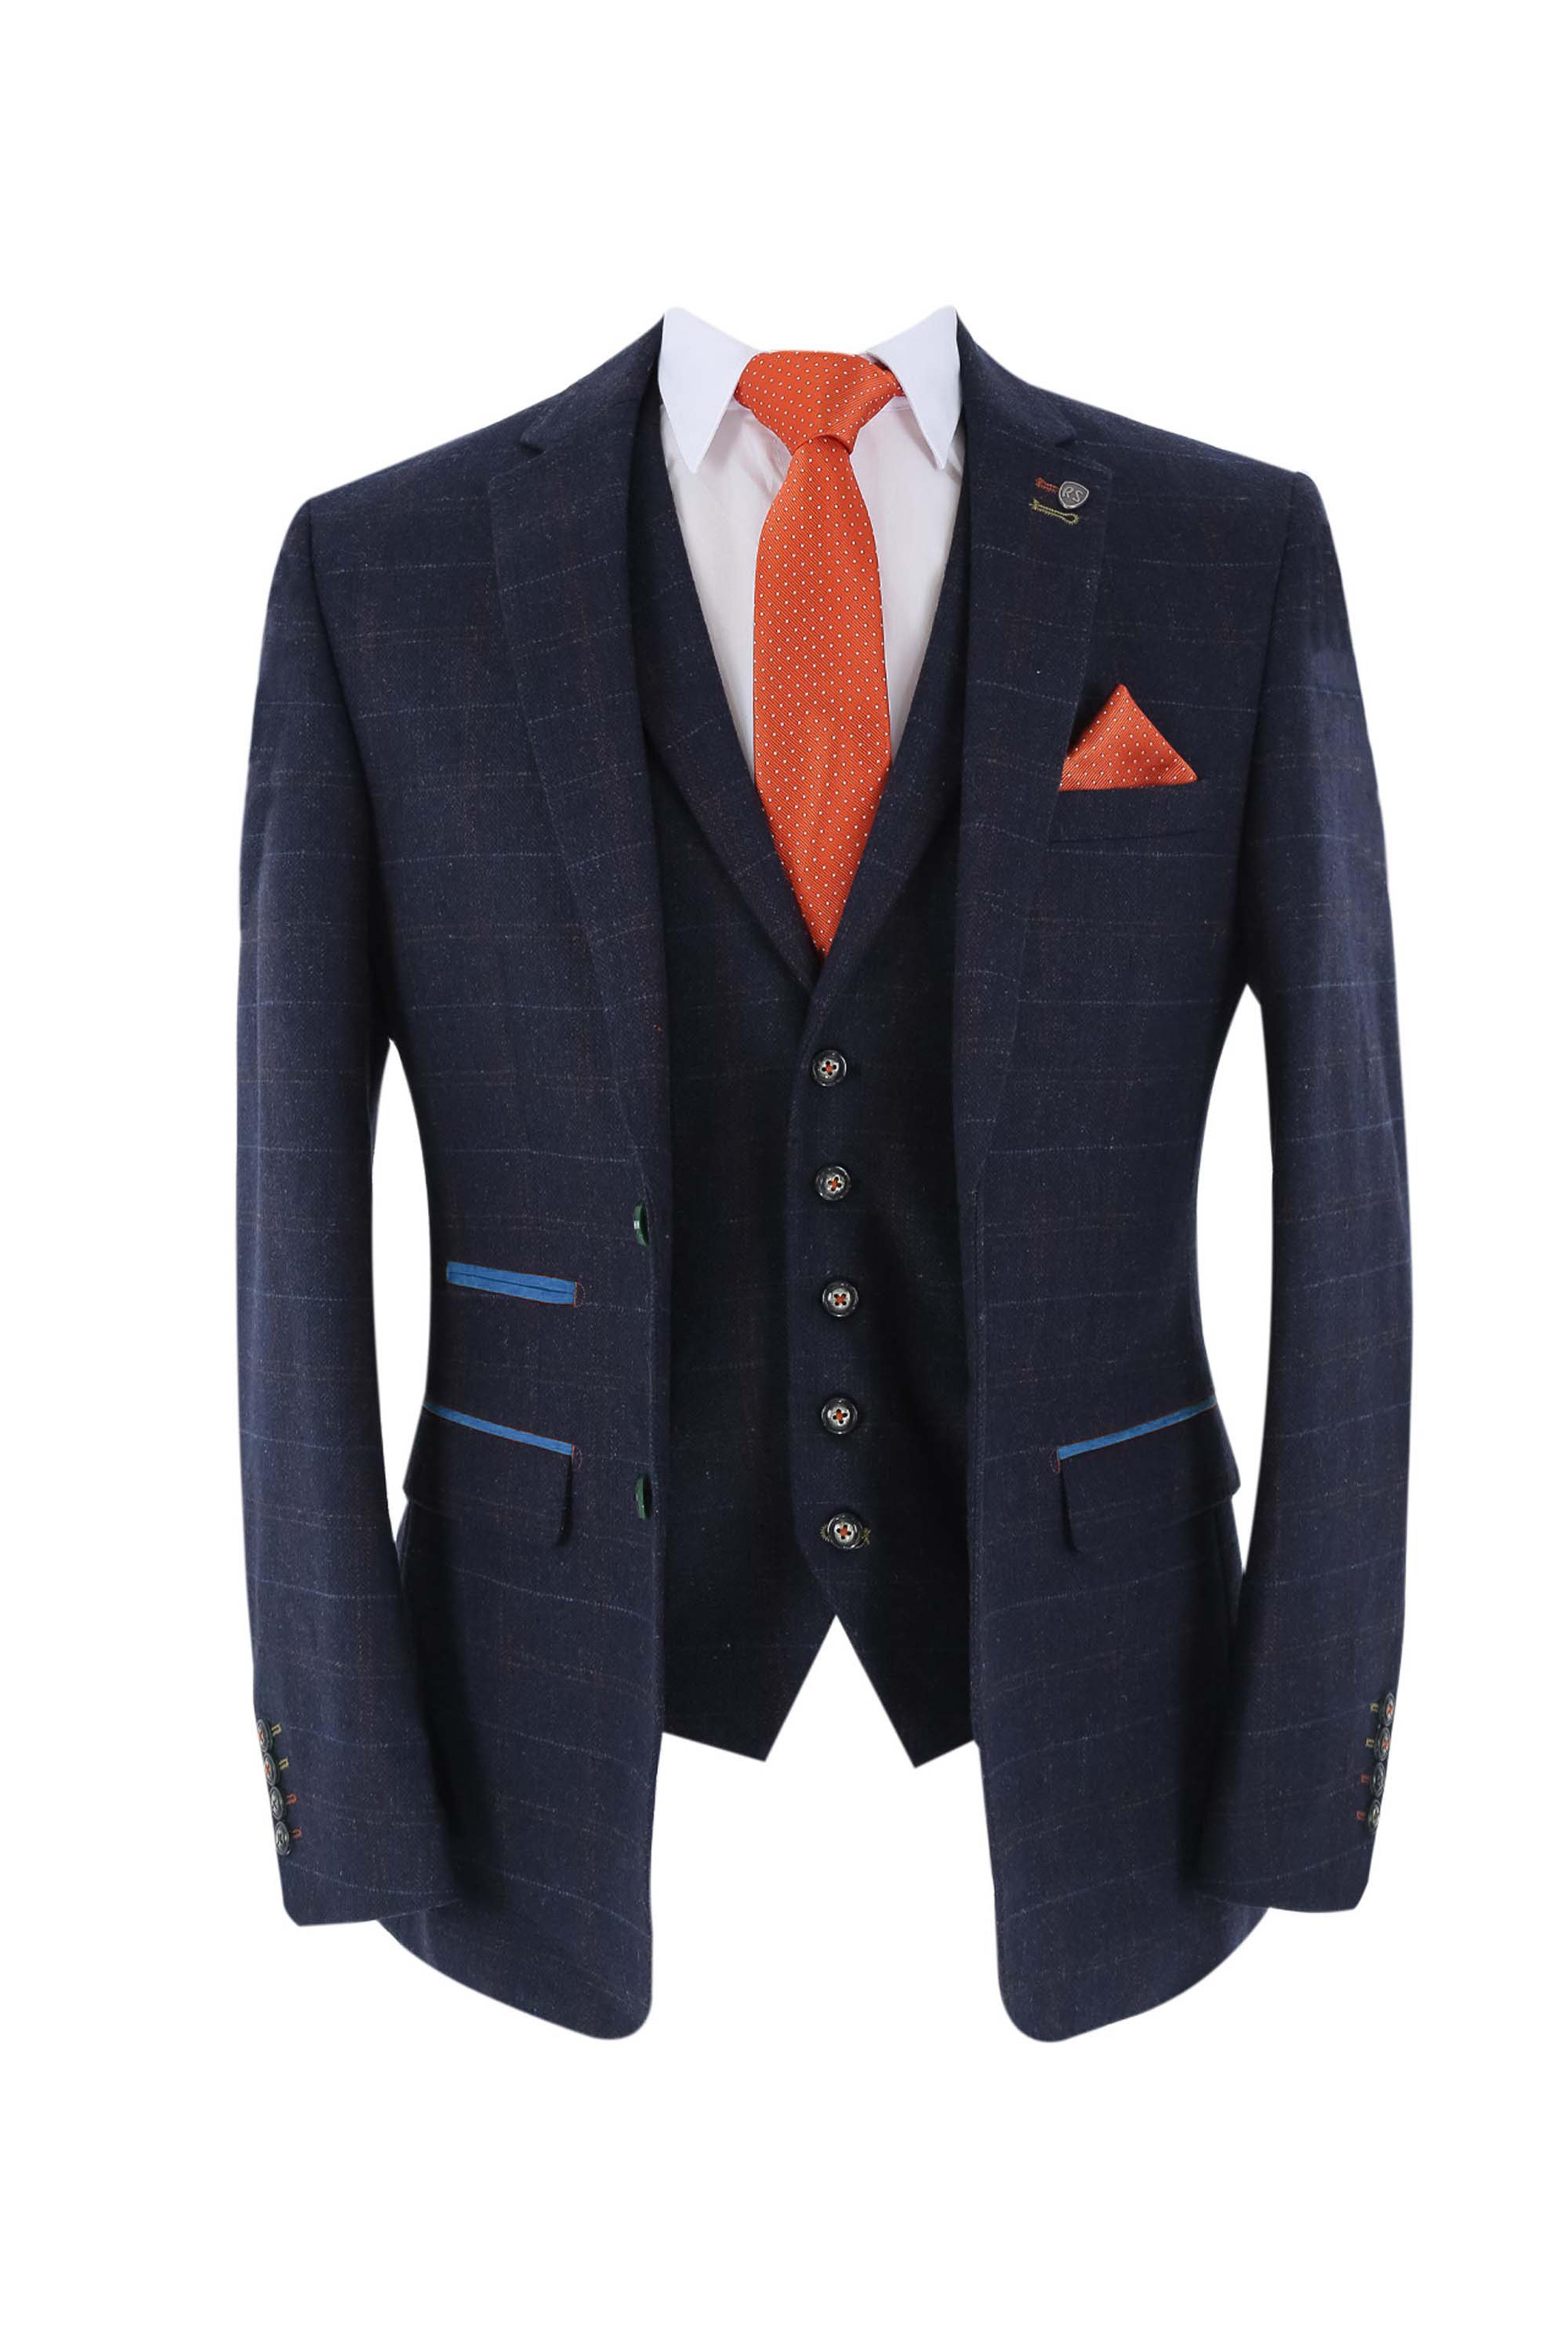 Men's Tweed Windowpane Tailored Fit Navy Suit Jacket  - RYAN